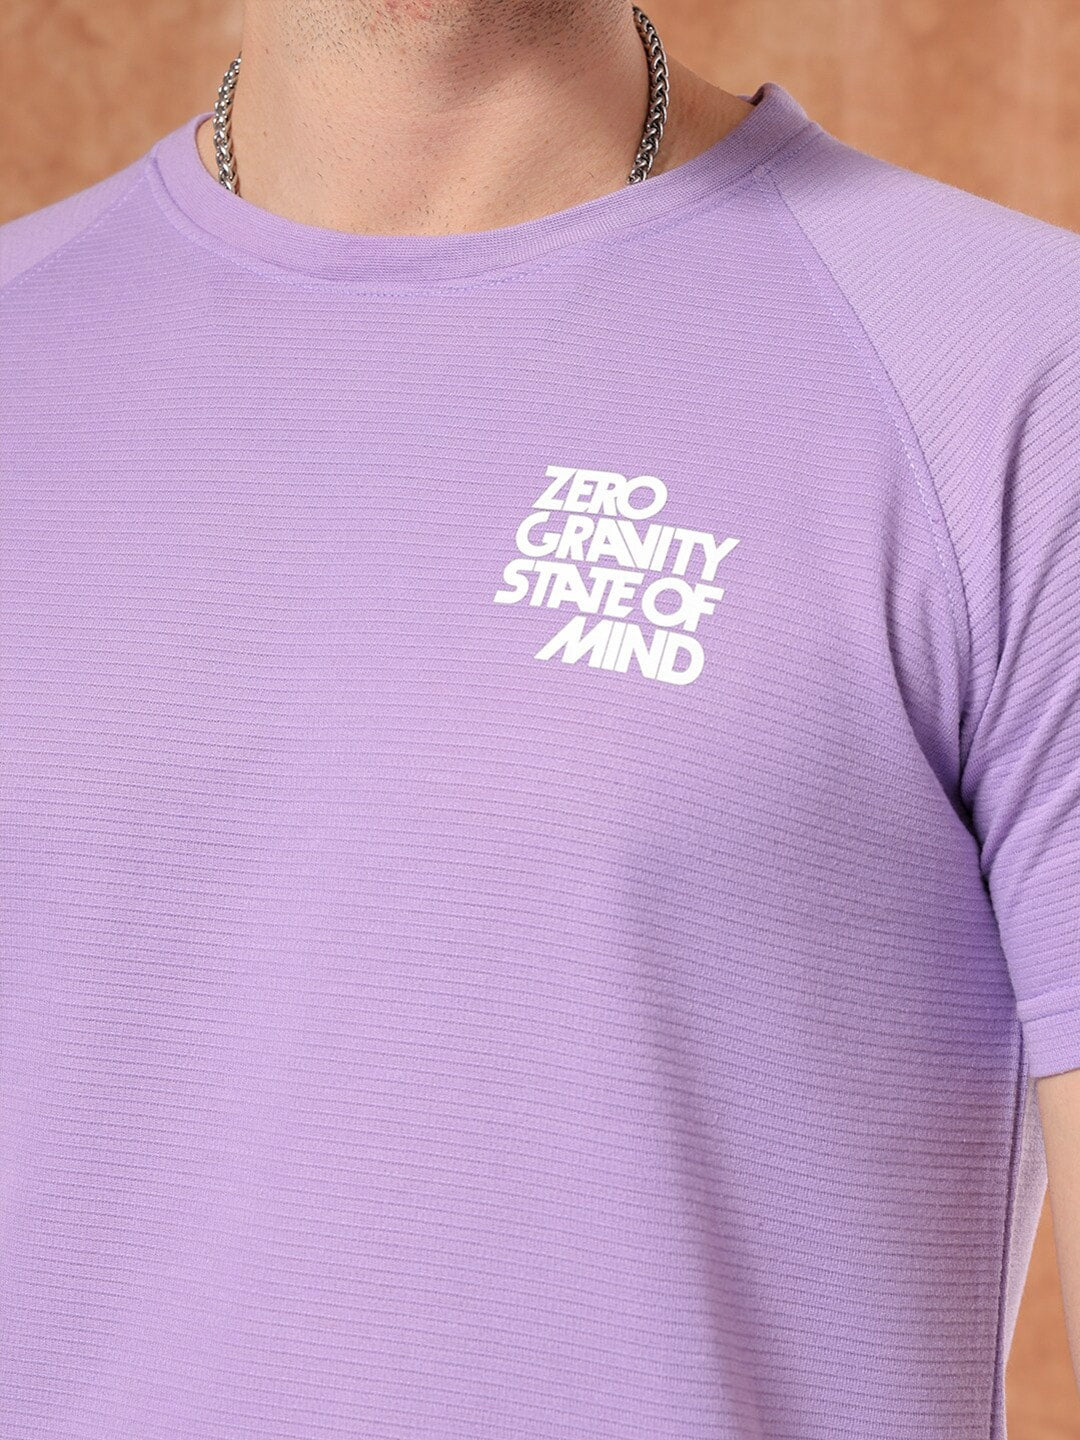 Shop Men Solid Tshirts Online.